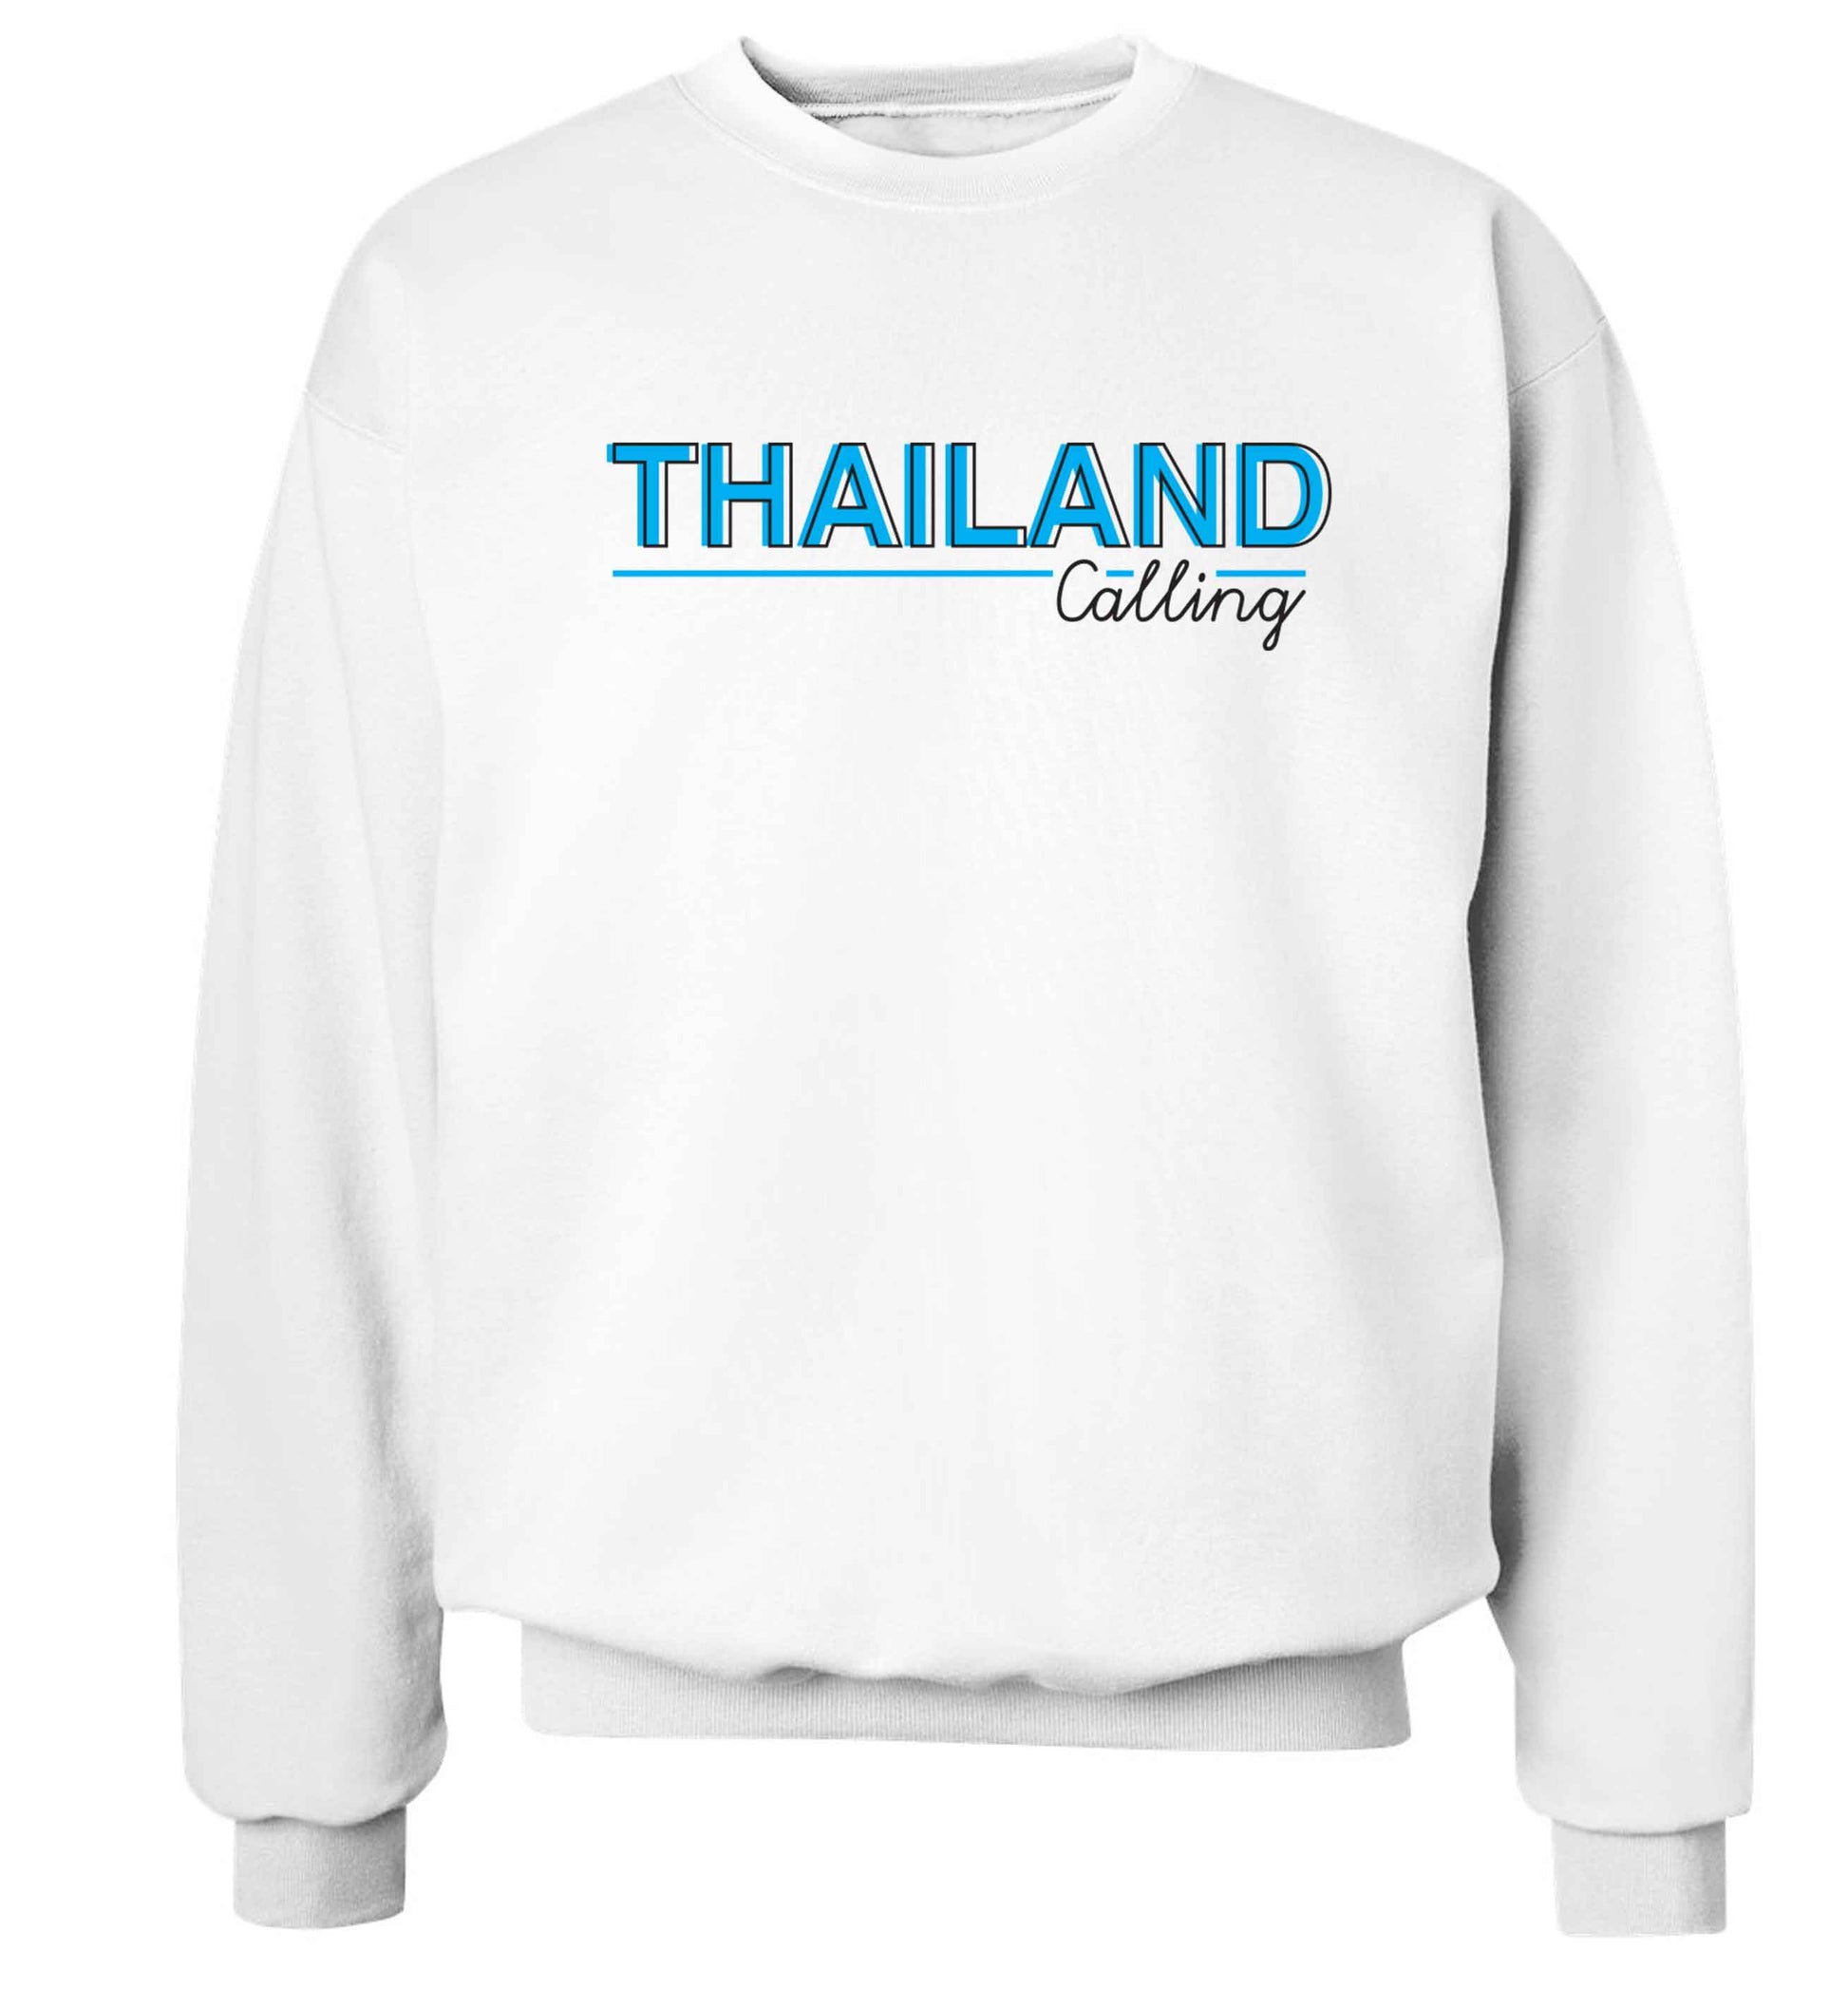 Thailand calling Adult's unisex white Sweater 2XL